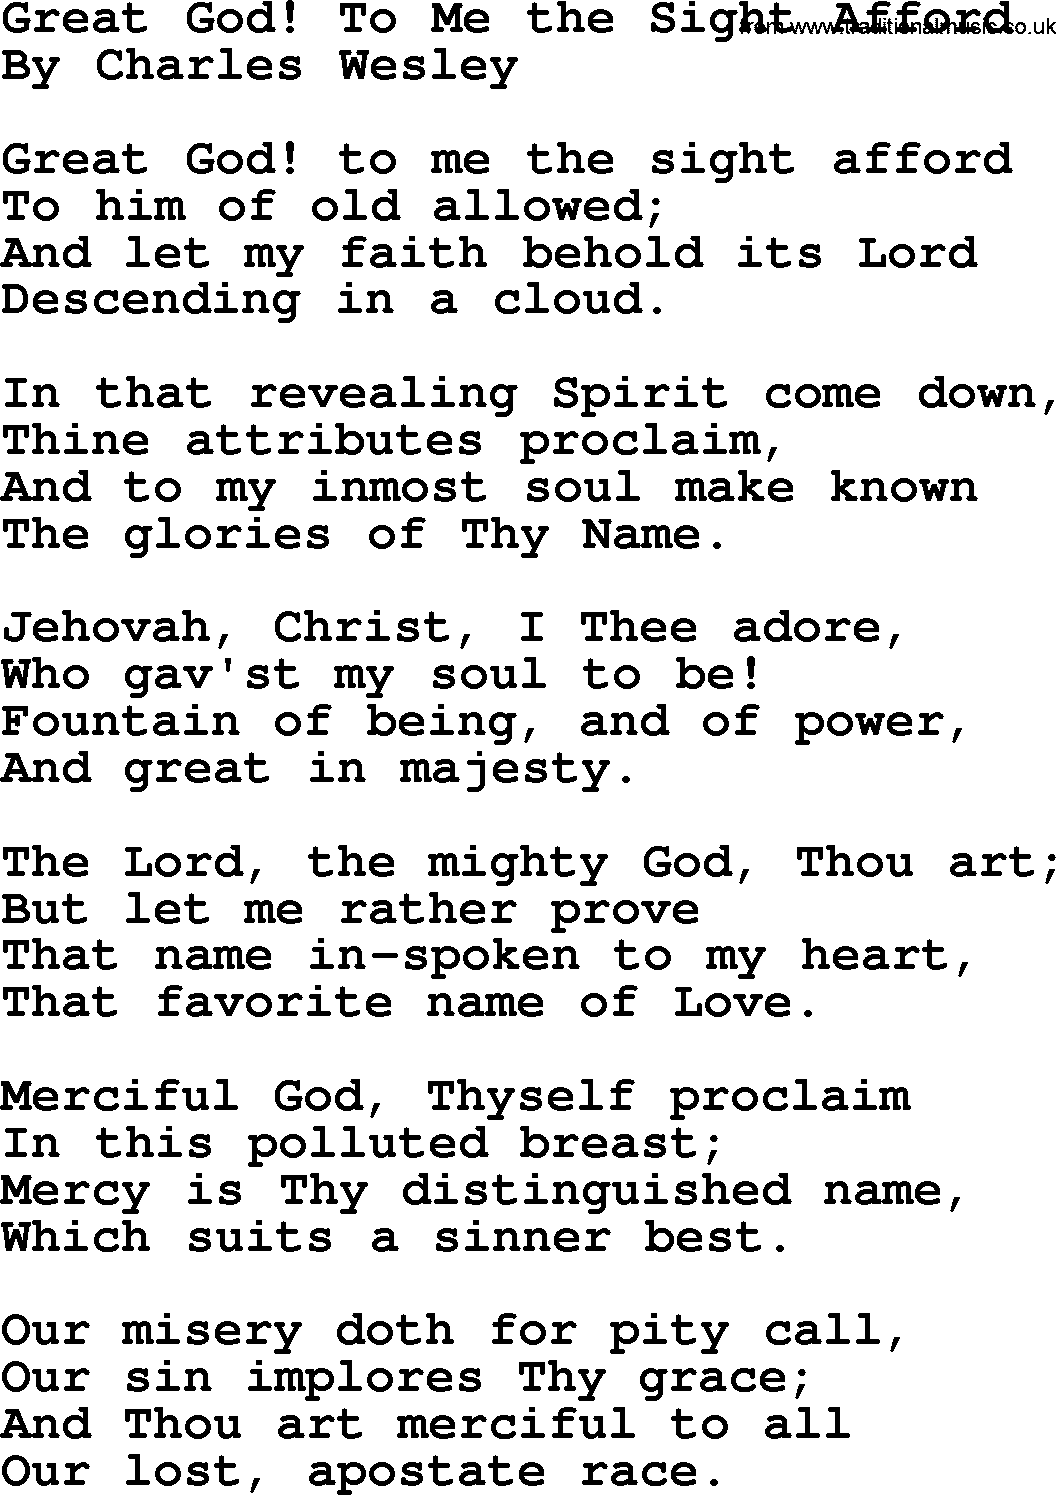 Charles Wesley hymn: Great God! To Me The Sight Afford, lyrics